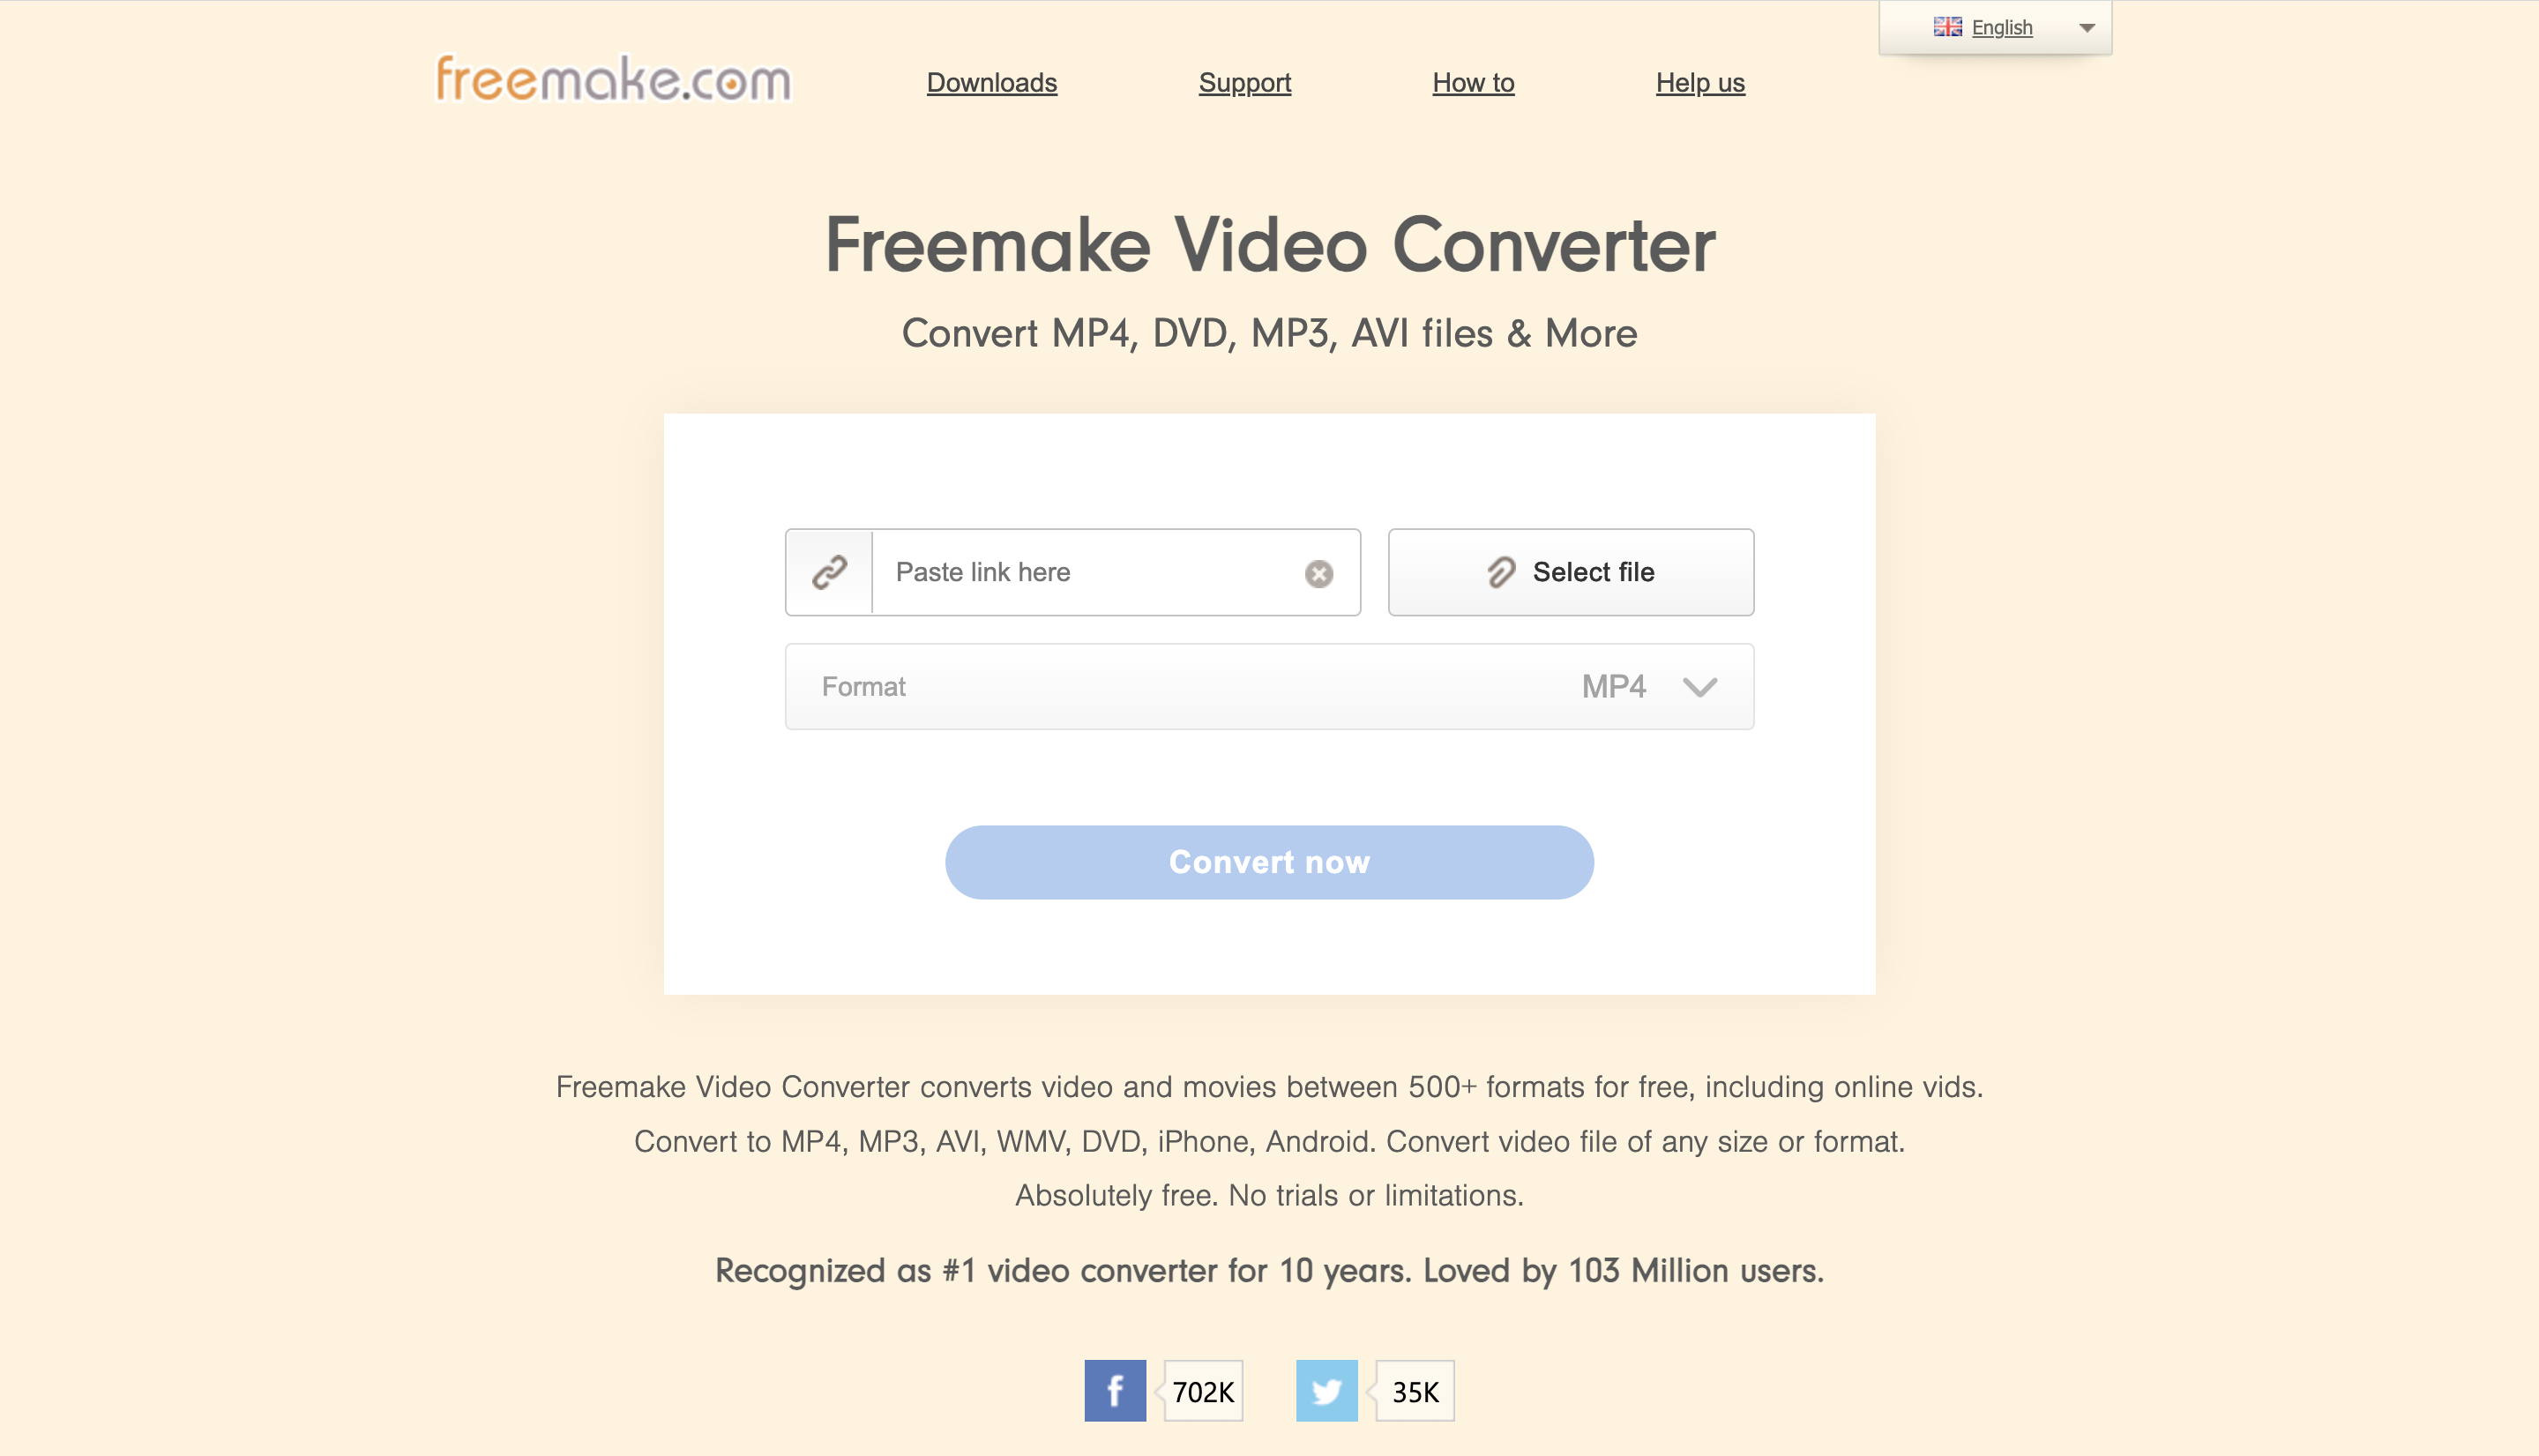 Freemake Video Converter: